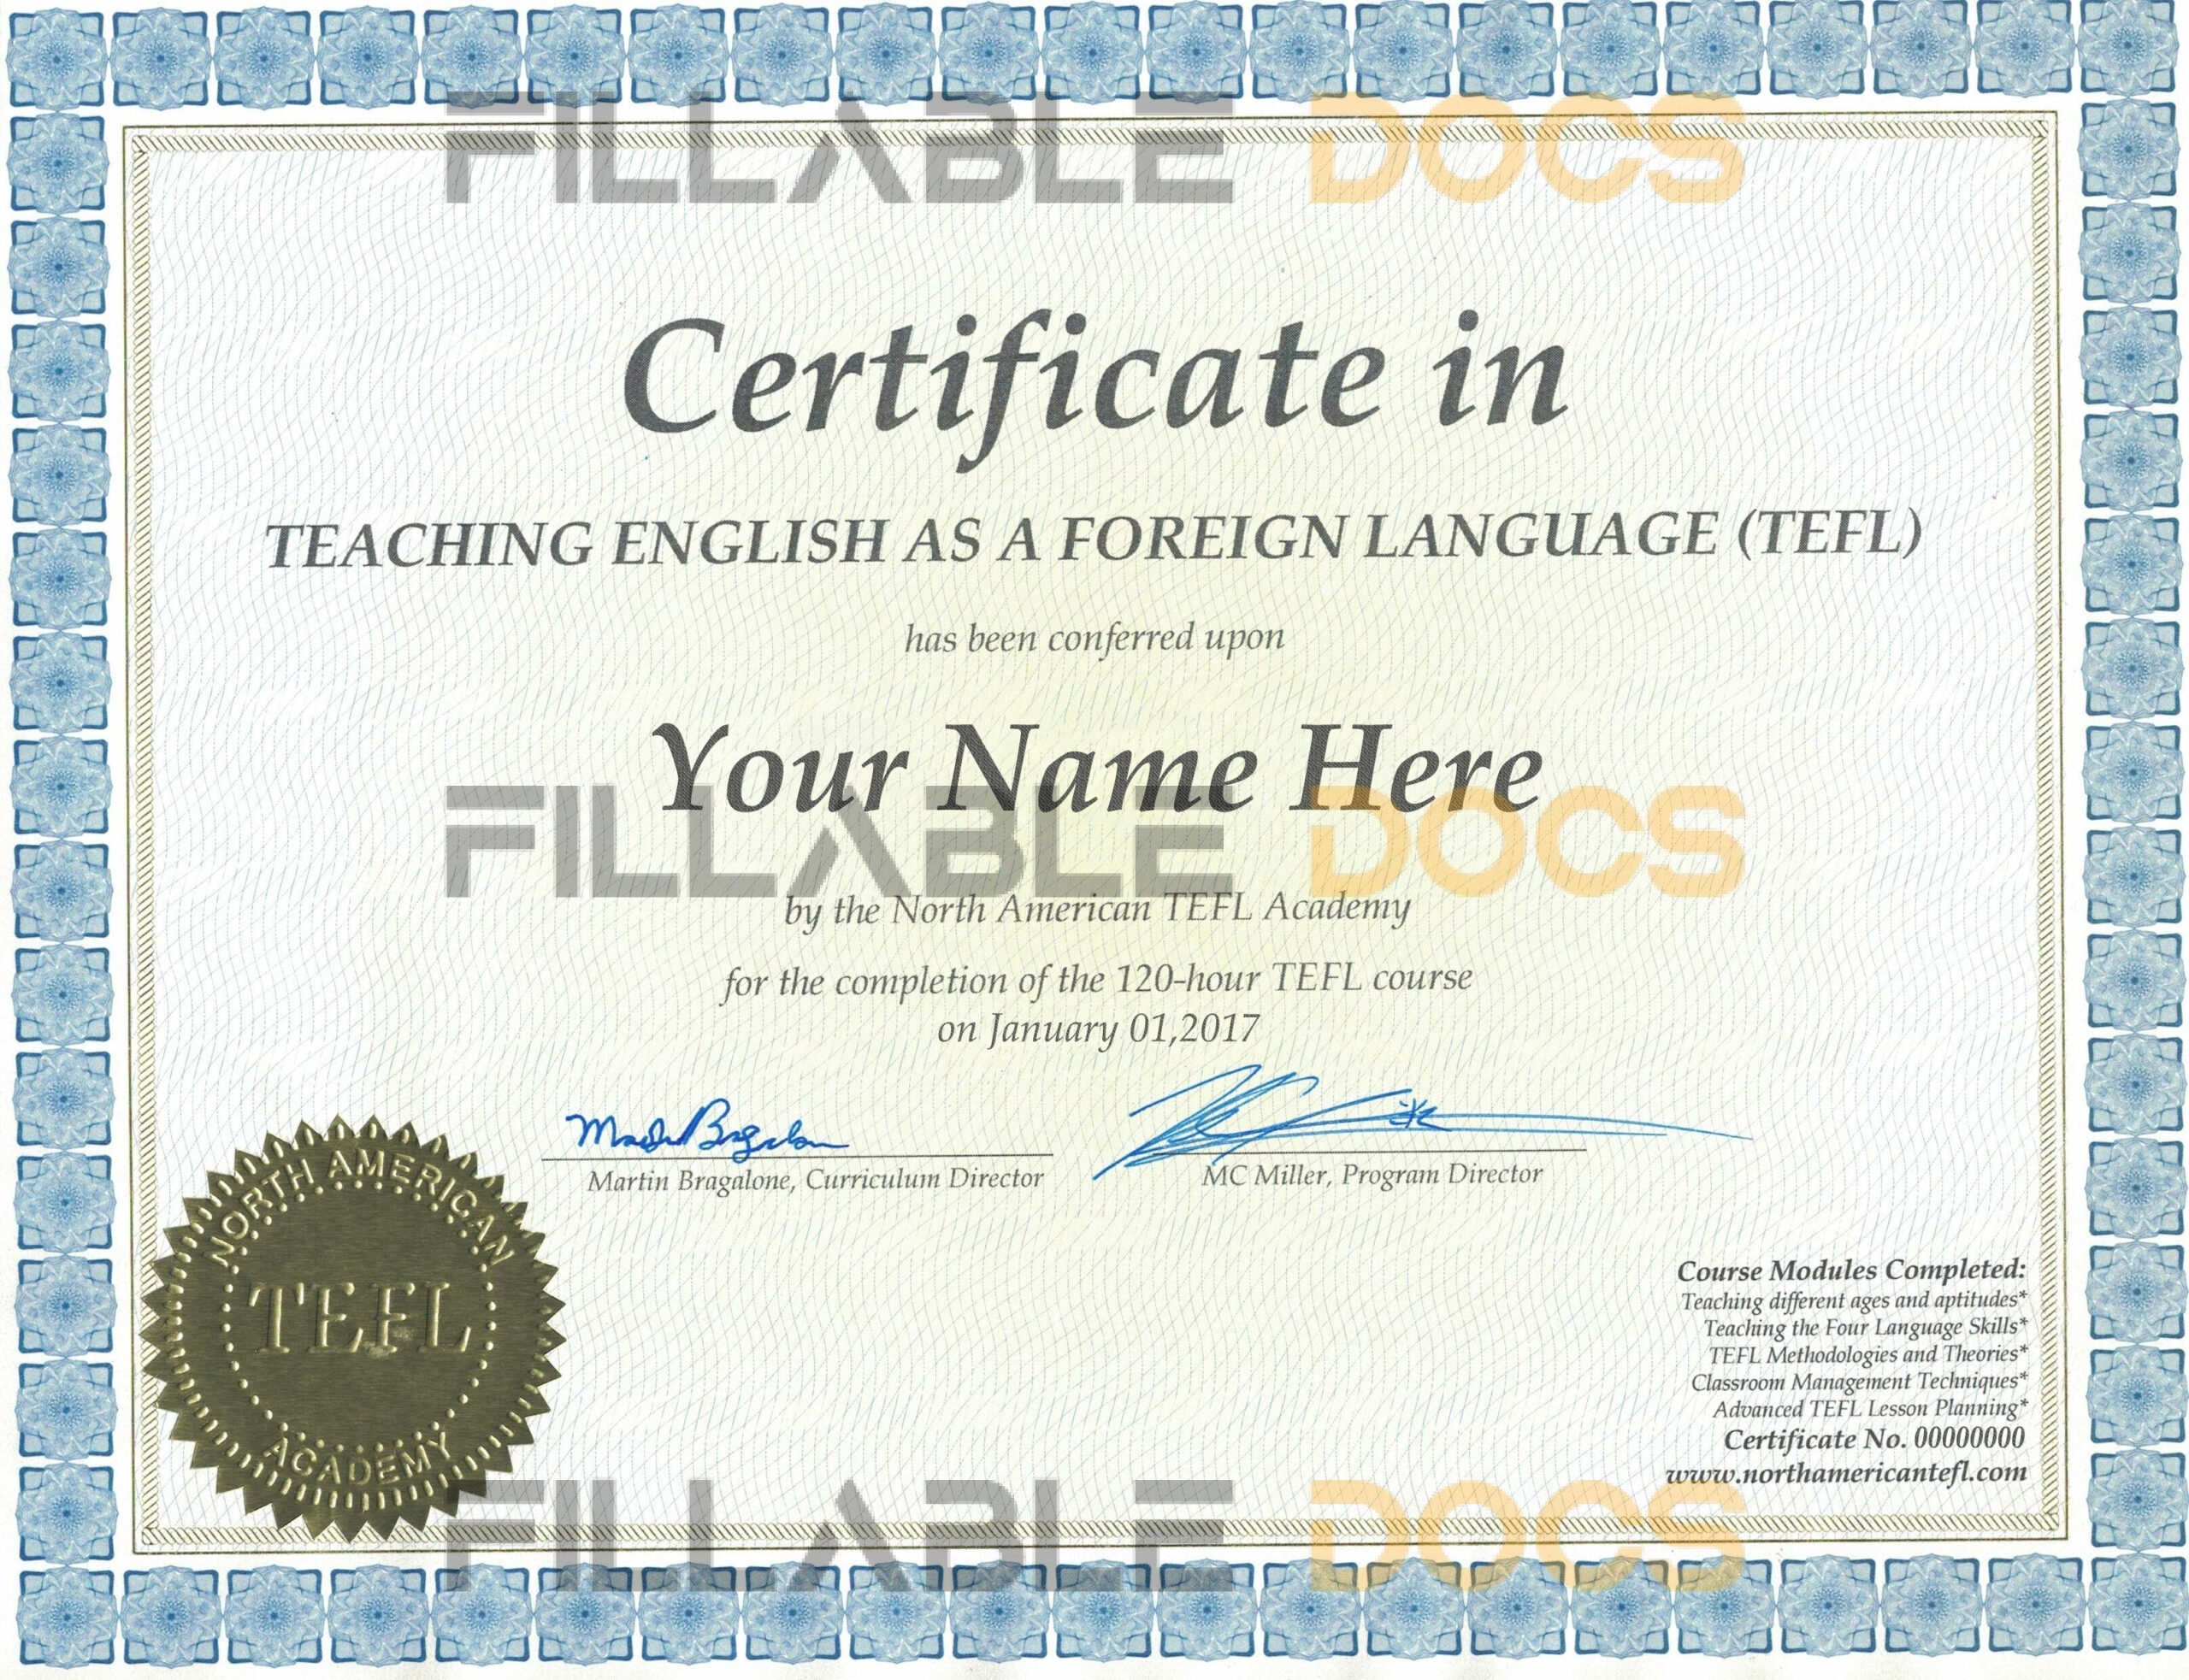 North American Academy TEFL Certificate PSD Template